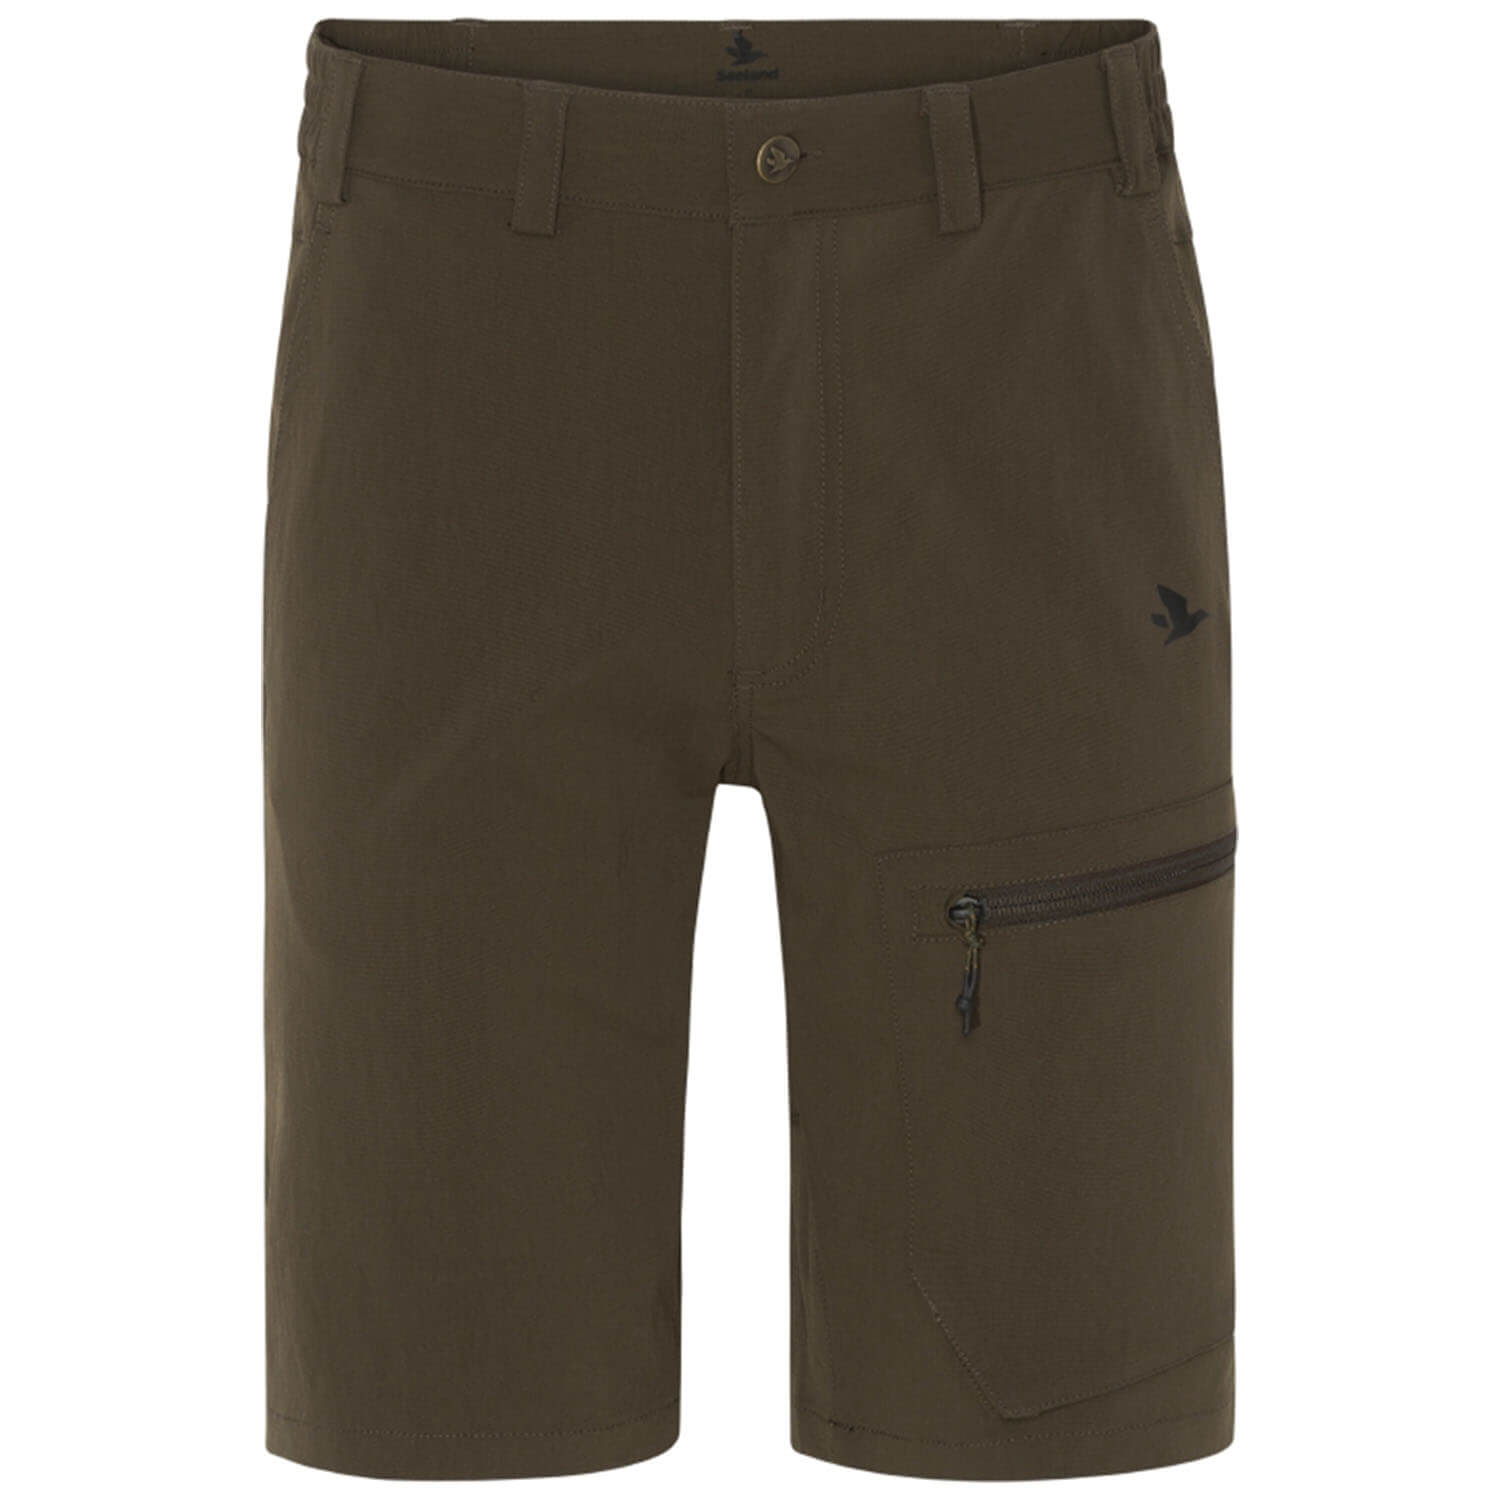 Seeland shorts rowan stretch - Hunting Trousers